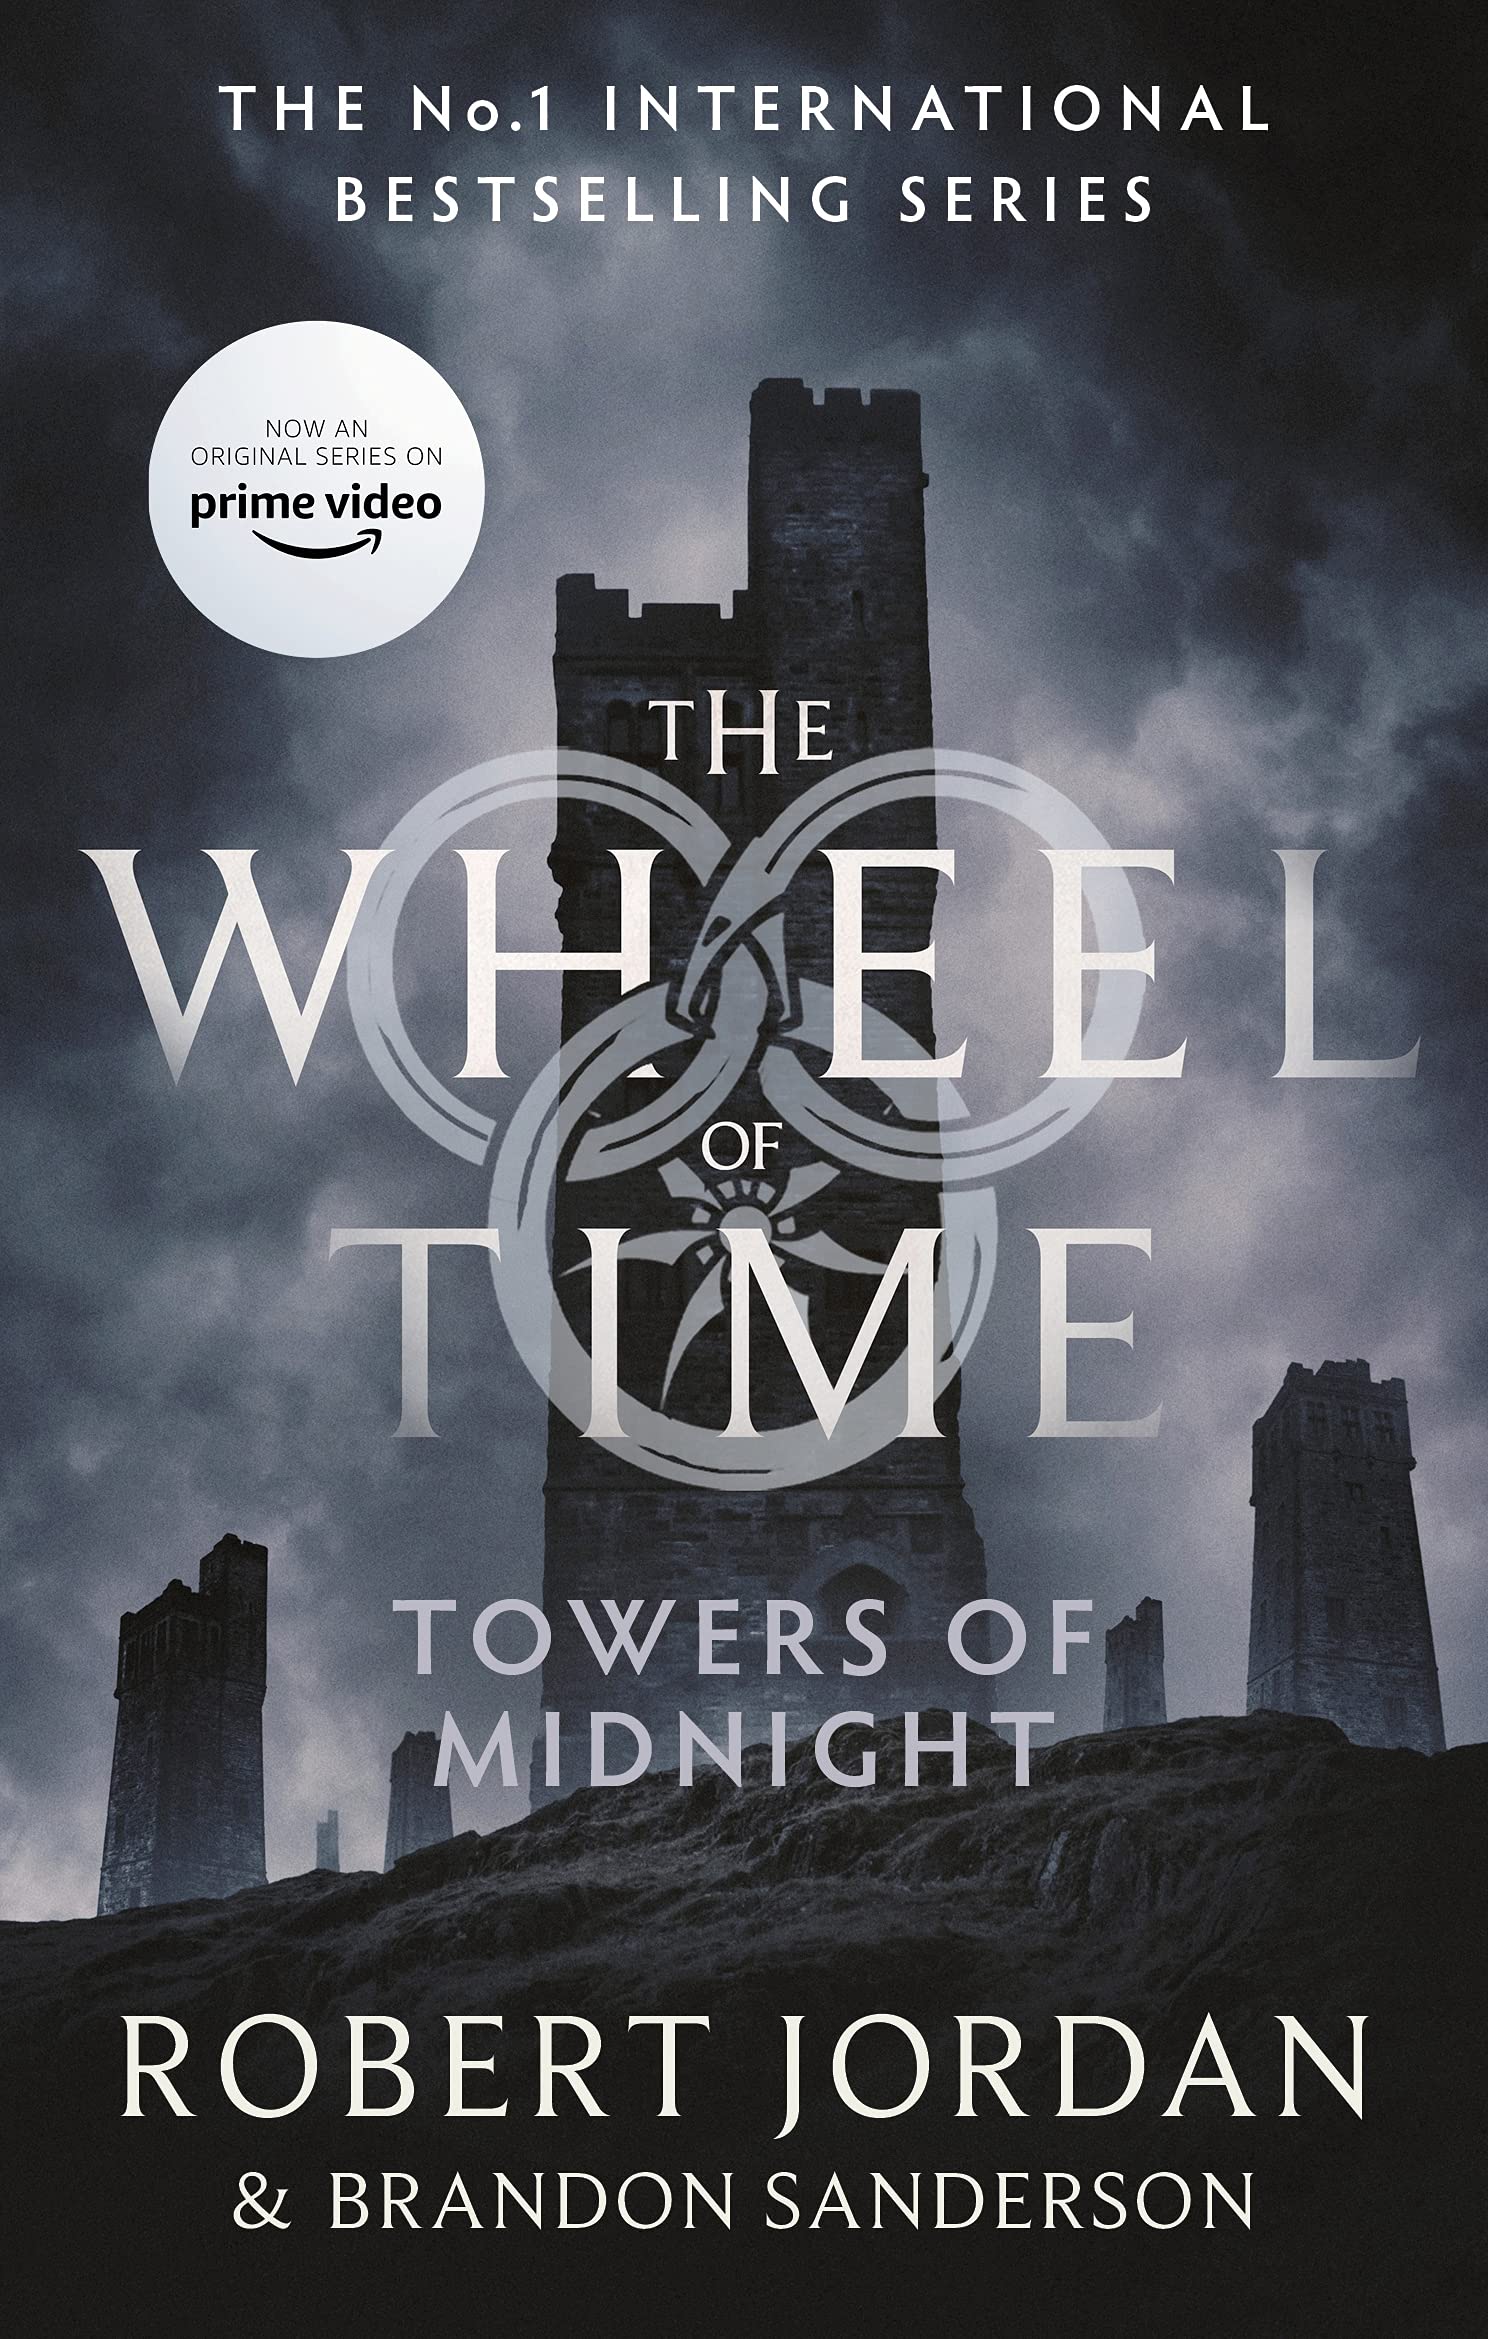 Midnight (Book 13 of the Wheel of Time) by Robert Jordan & Brandon Sanderson | Rose Books